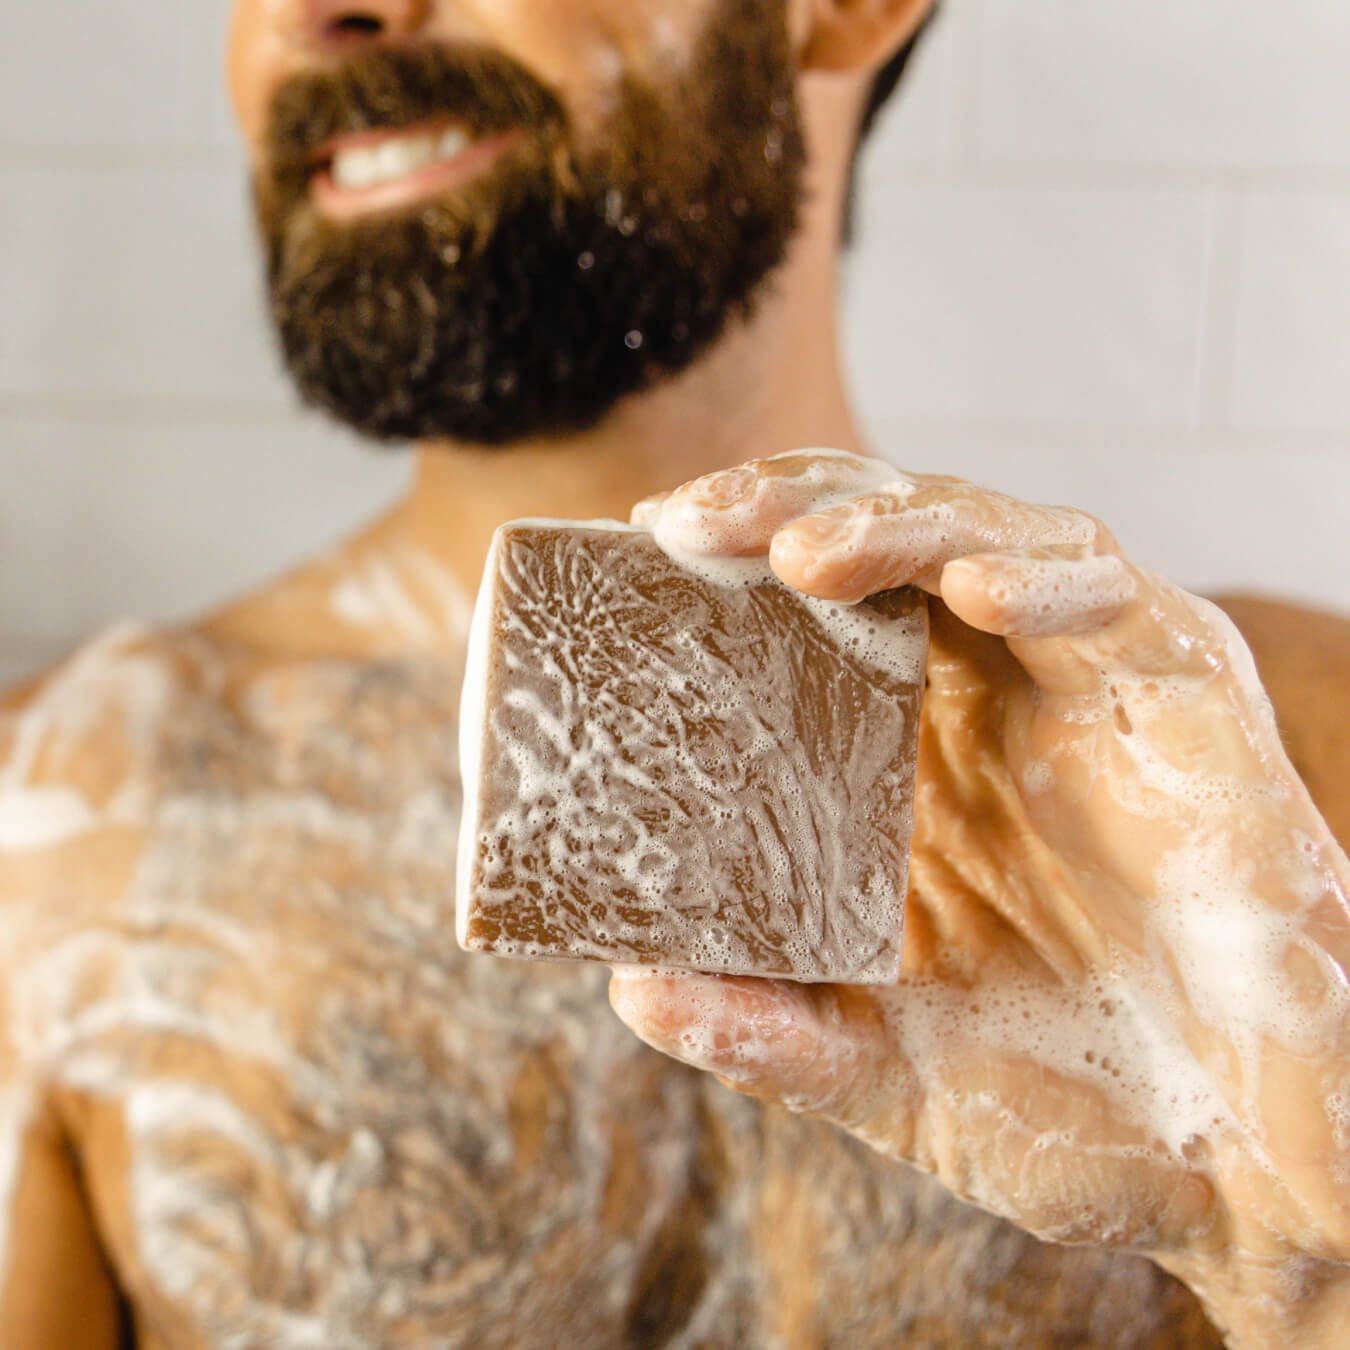 FOR MEN Liquid Body Wash/Hand Soap | Cedar & Bourbon